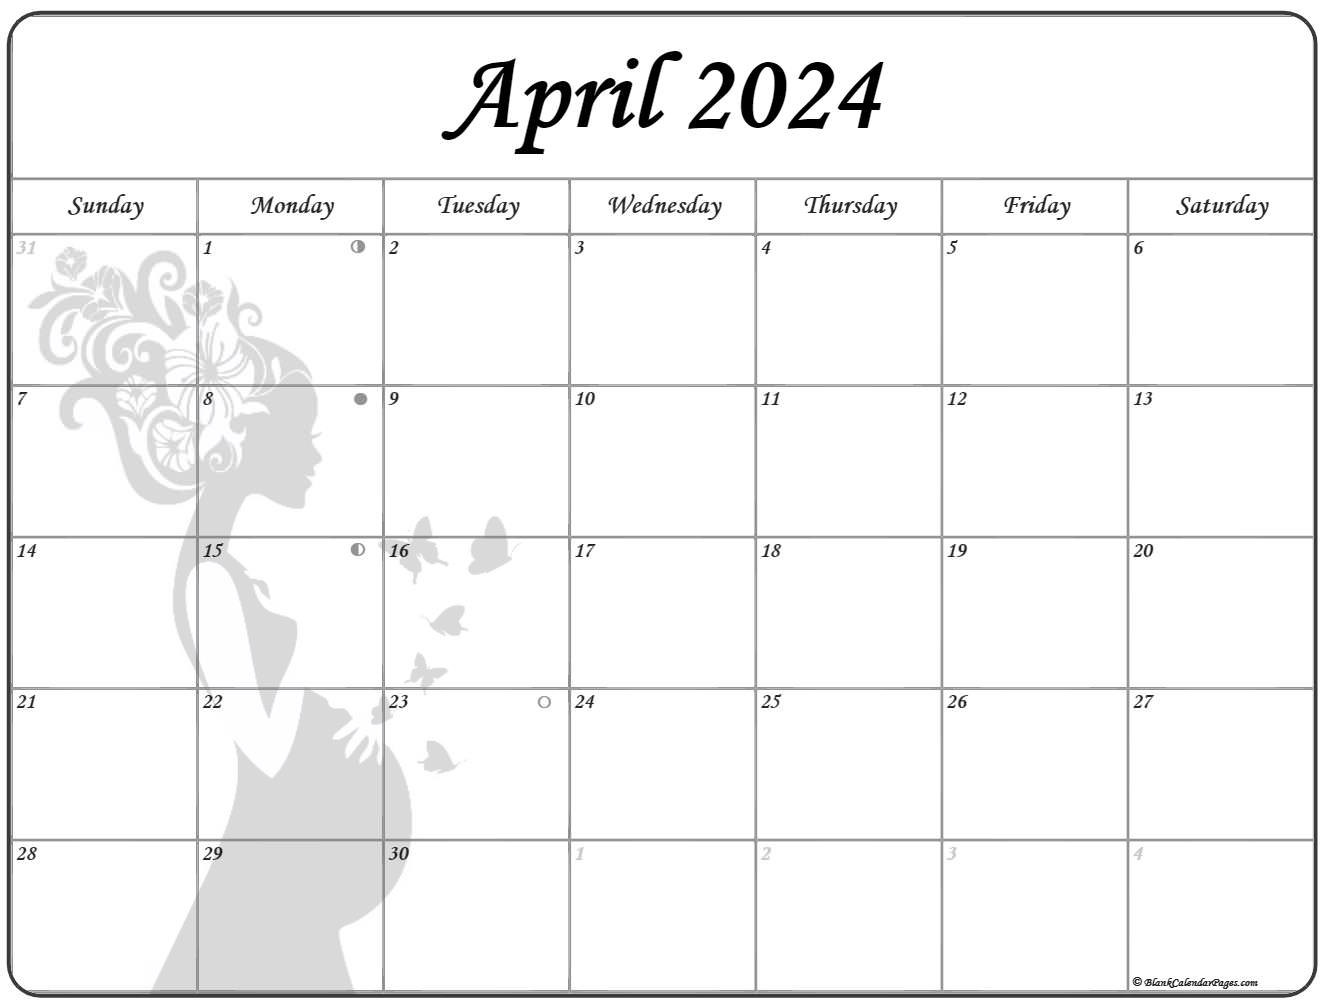 April 2020 Pregnancy Calendar